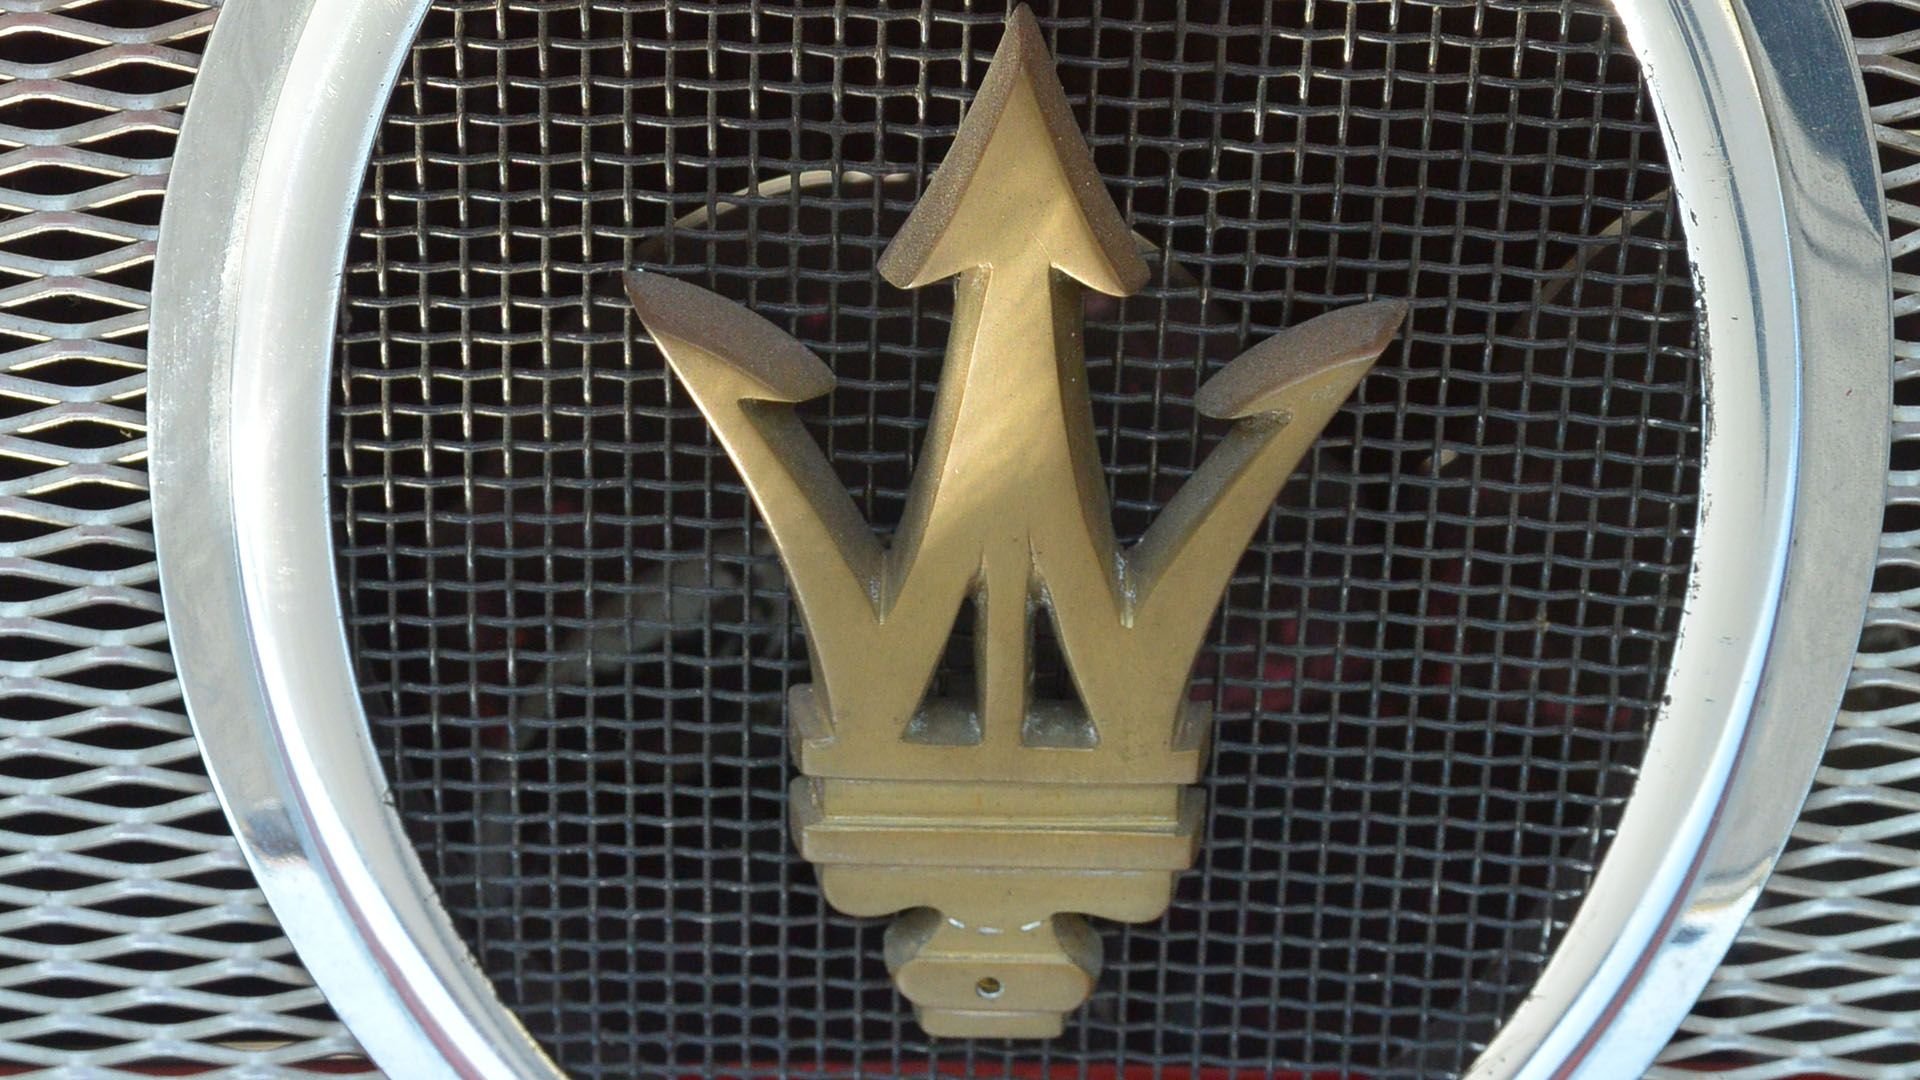 Broad Arrow Auctions | 1962 Maserati 3500GT Moretti Coupe